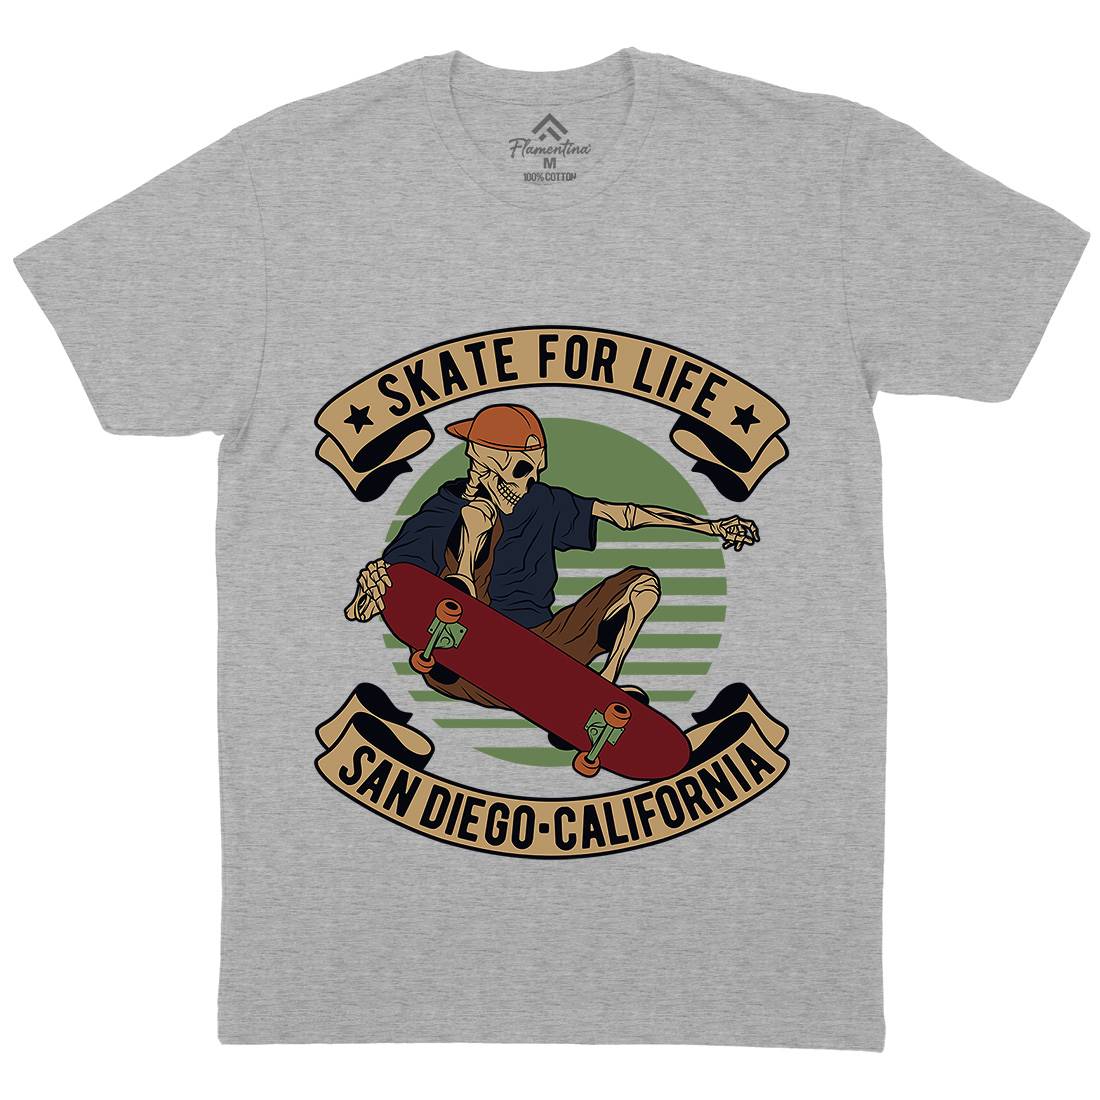 For Life Mens Organic Crew Neck T-Shirt Skate D970